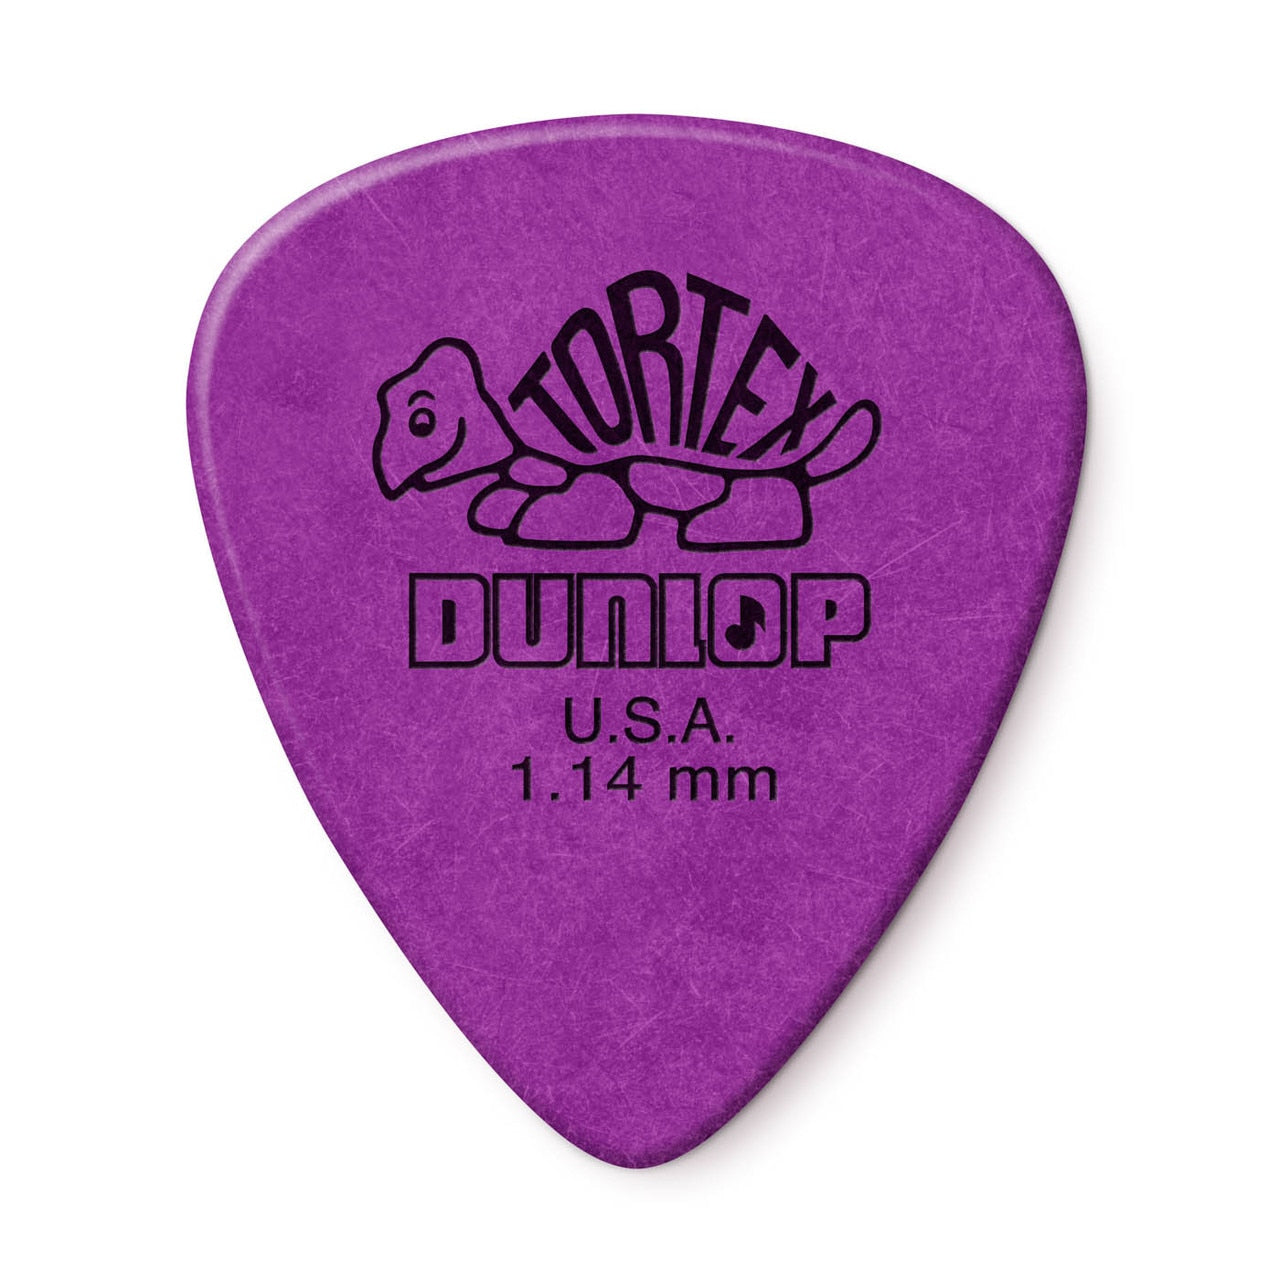 Dunlop Tortex Standard Pick, 12-Pack, 1.14mm in Purple